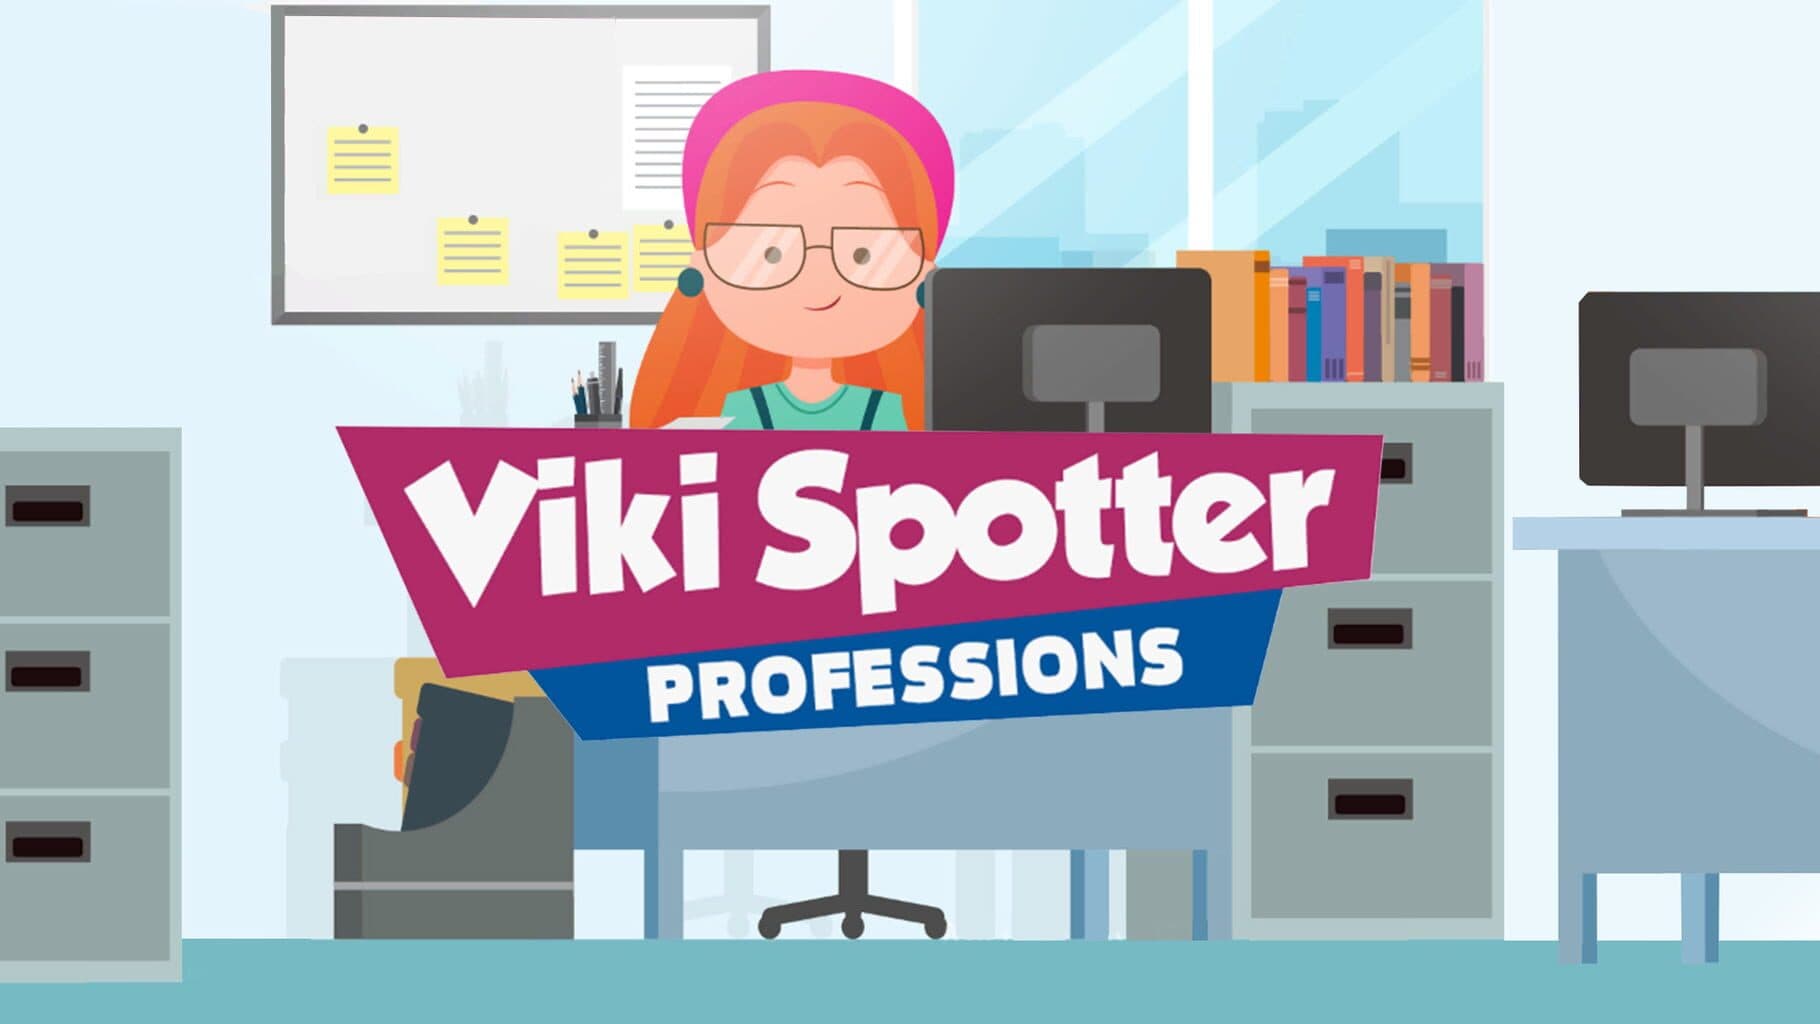 Viki Spotter: Professions Image